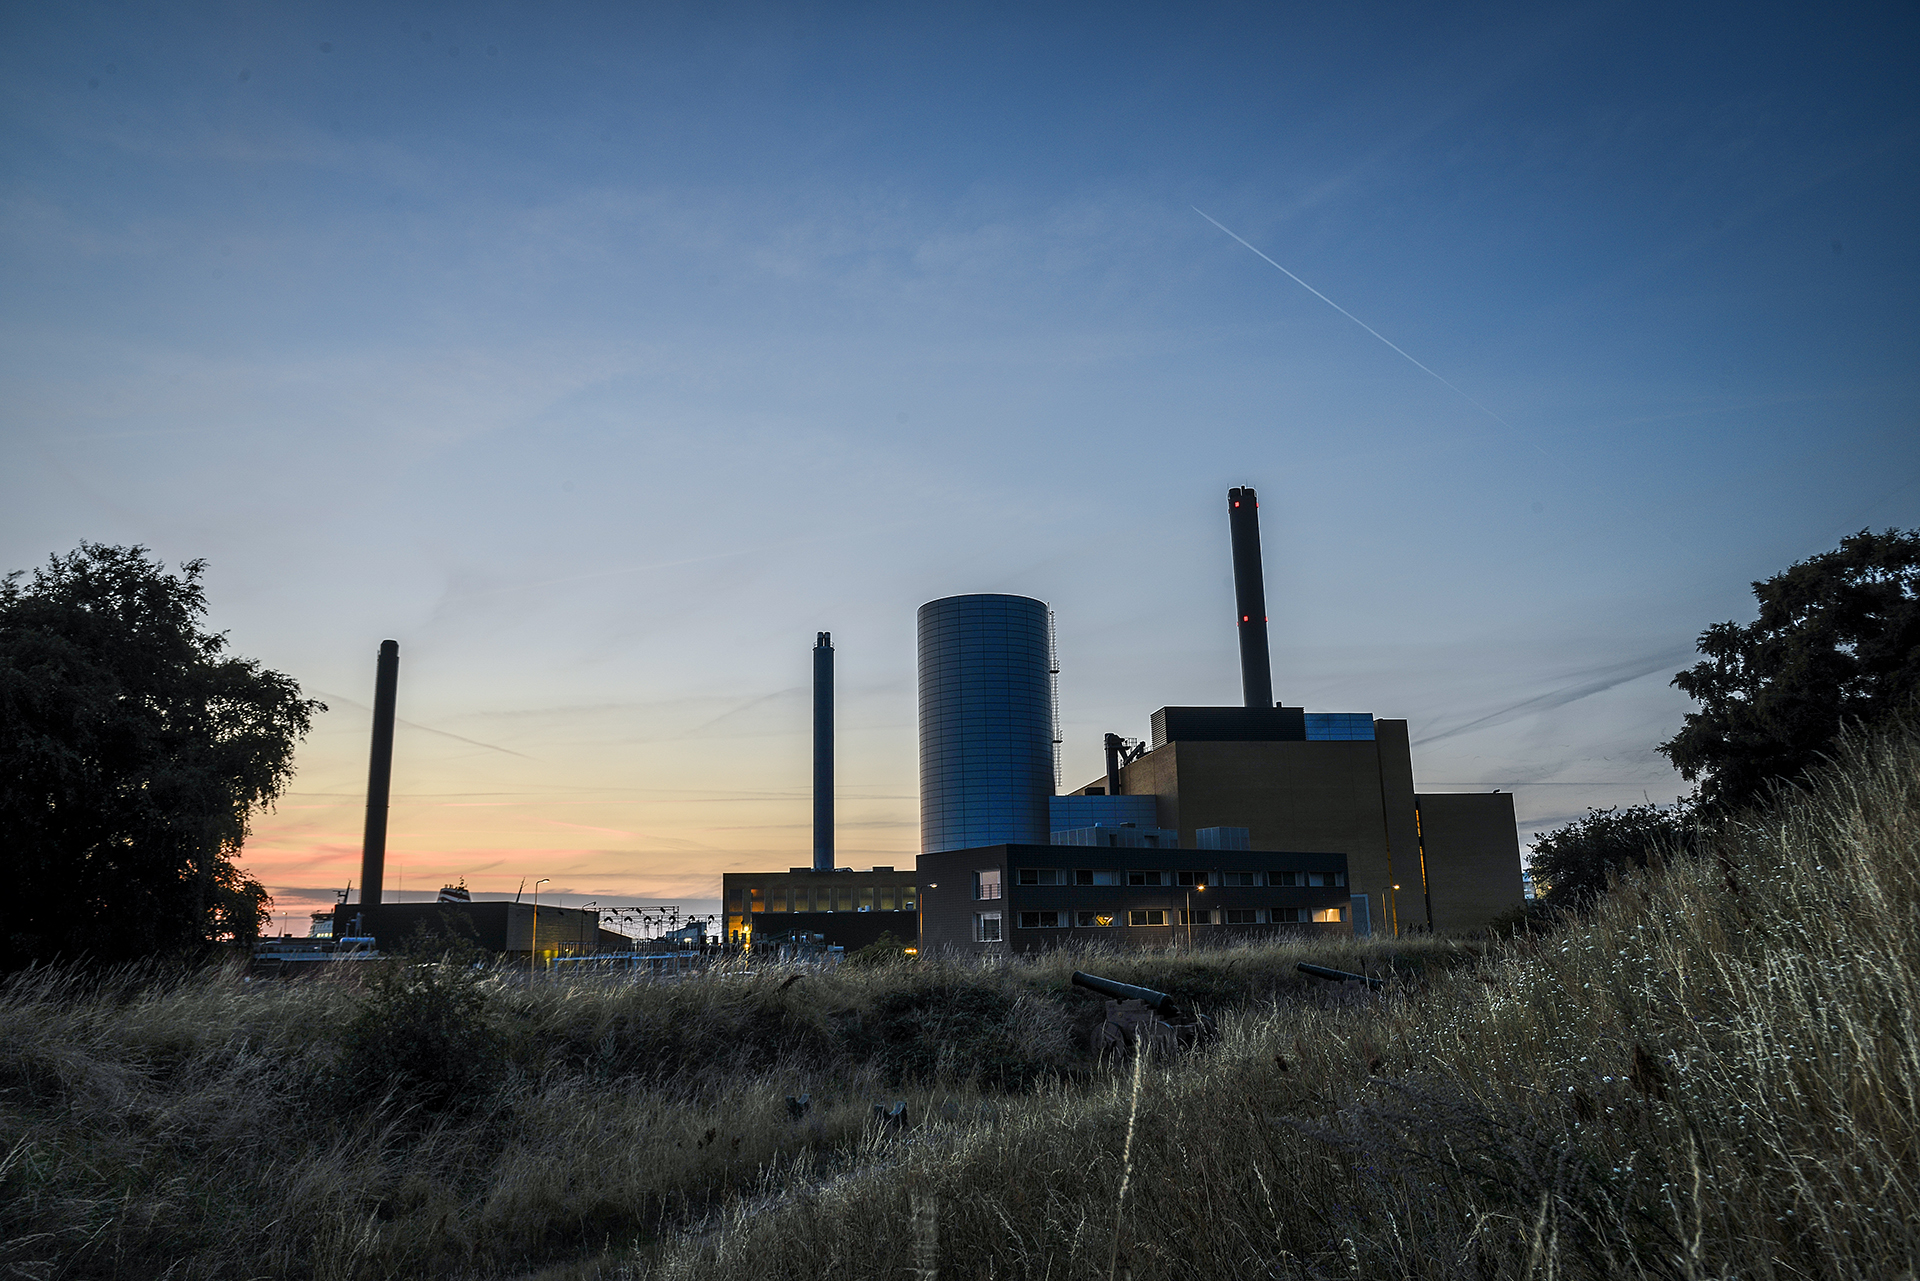 Bornholm’s energy utility company BEOF in Rønne